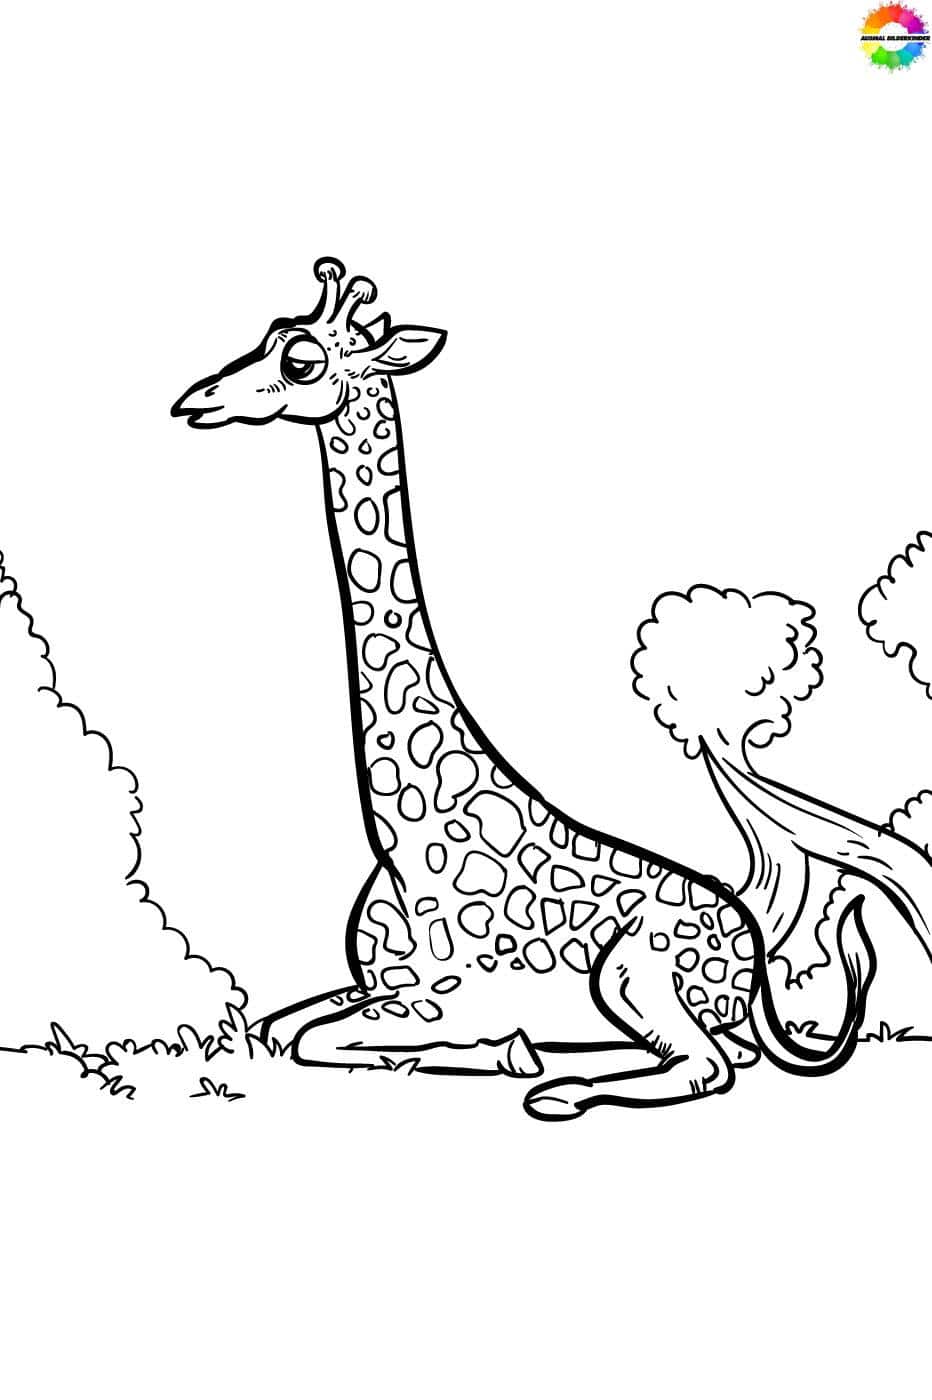 Giraffe-Ausmalbilder-ausmalbilderkinder.de-17